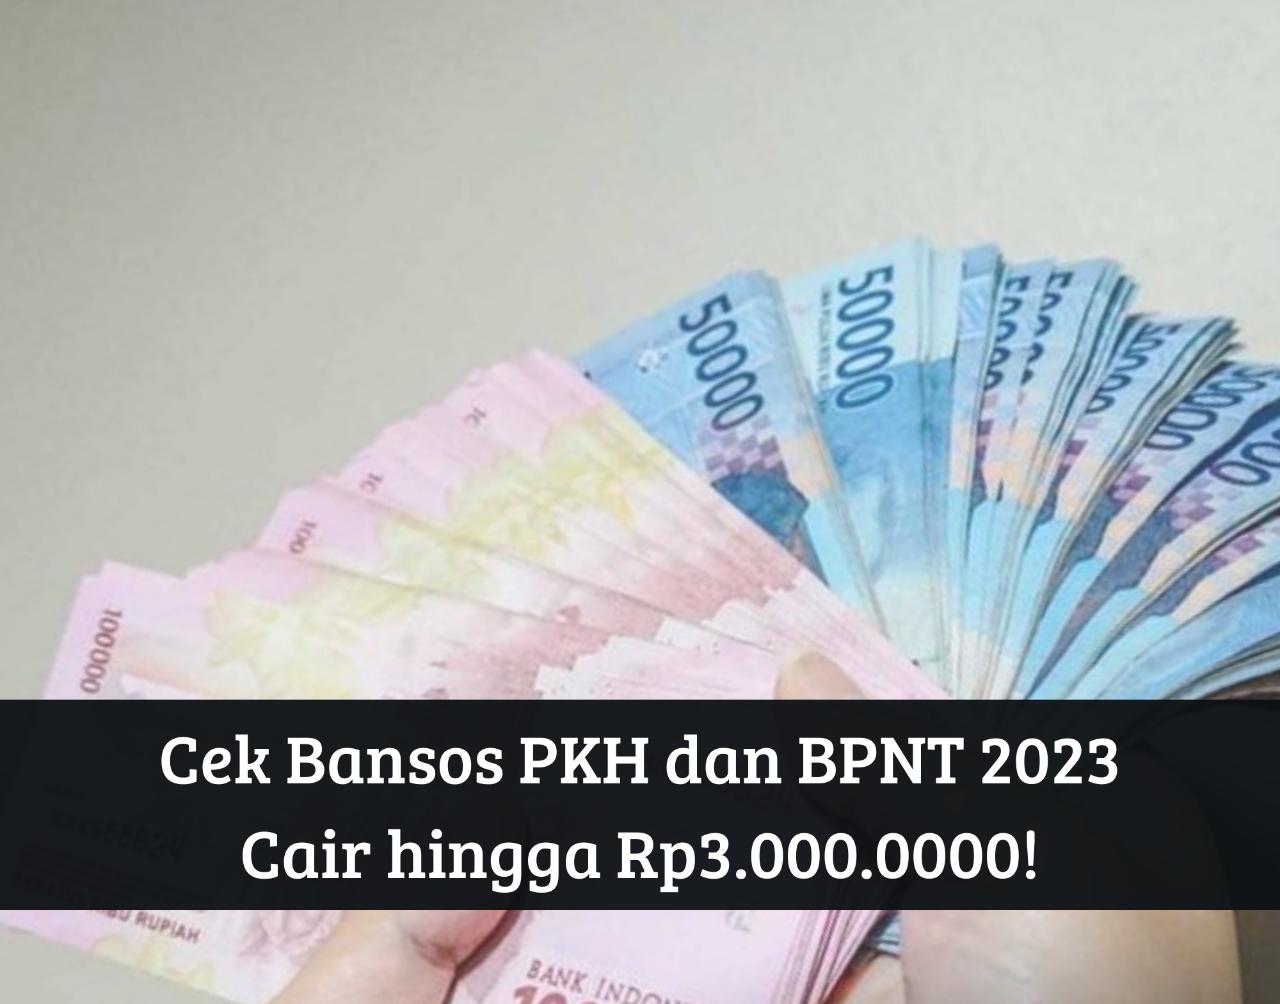 Login di Sini! Cek Bansos PKH dan BPNT 2023 Cair hingga Rp3.000.000, Lengkap dengan Jadwal dan Syaratnya